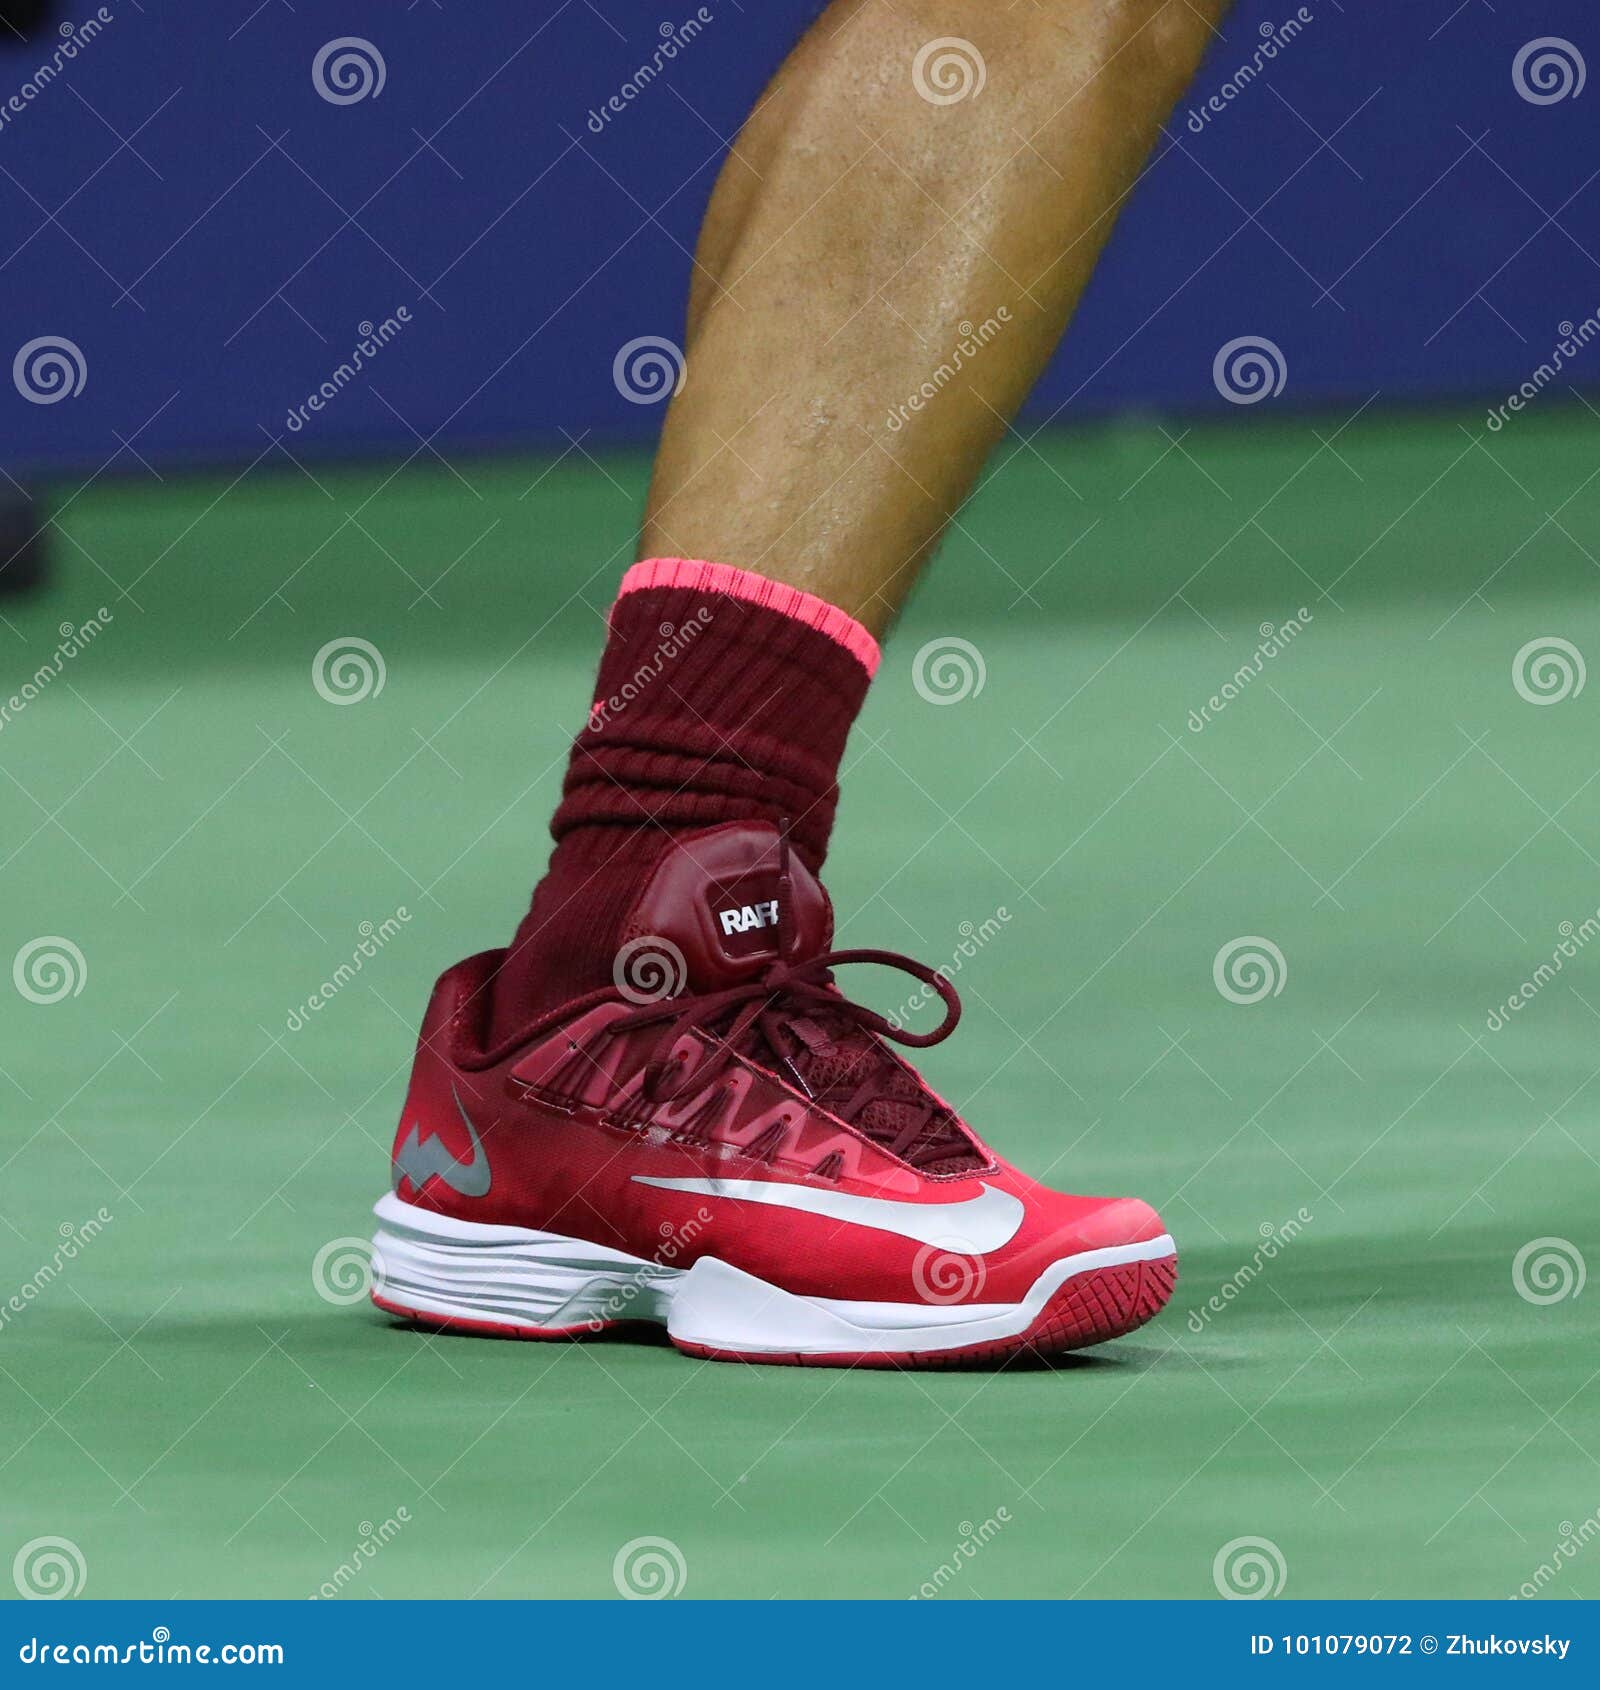 Grand Slam Champion Rafael Nadal of Spain Wears Custom Nike Tennis Shoes during US Open 2017 Editorial Photography - of rafael: 101079072